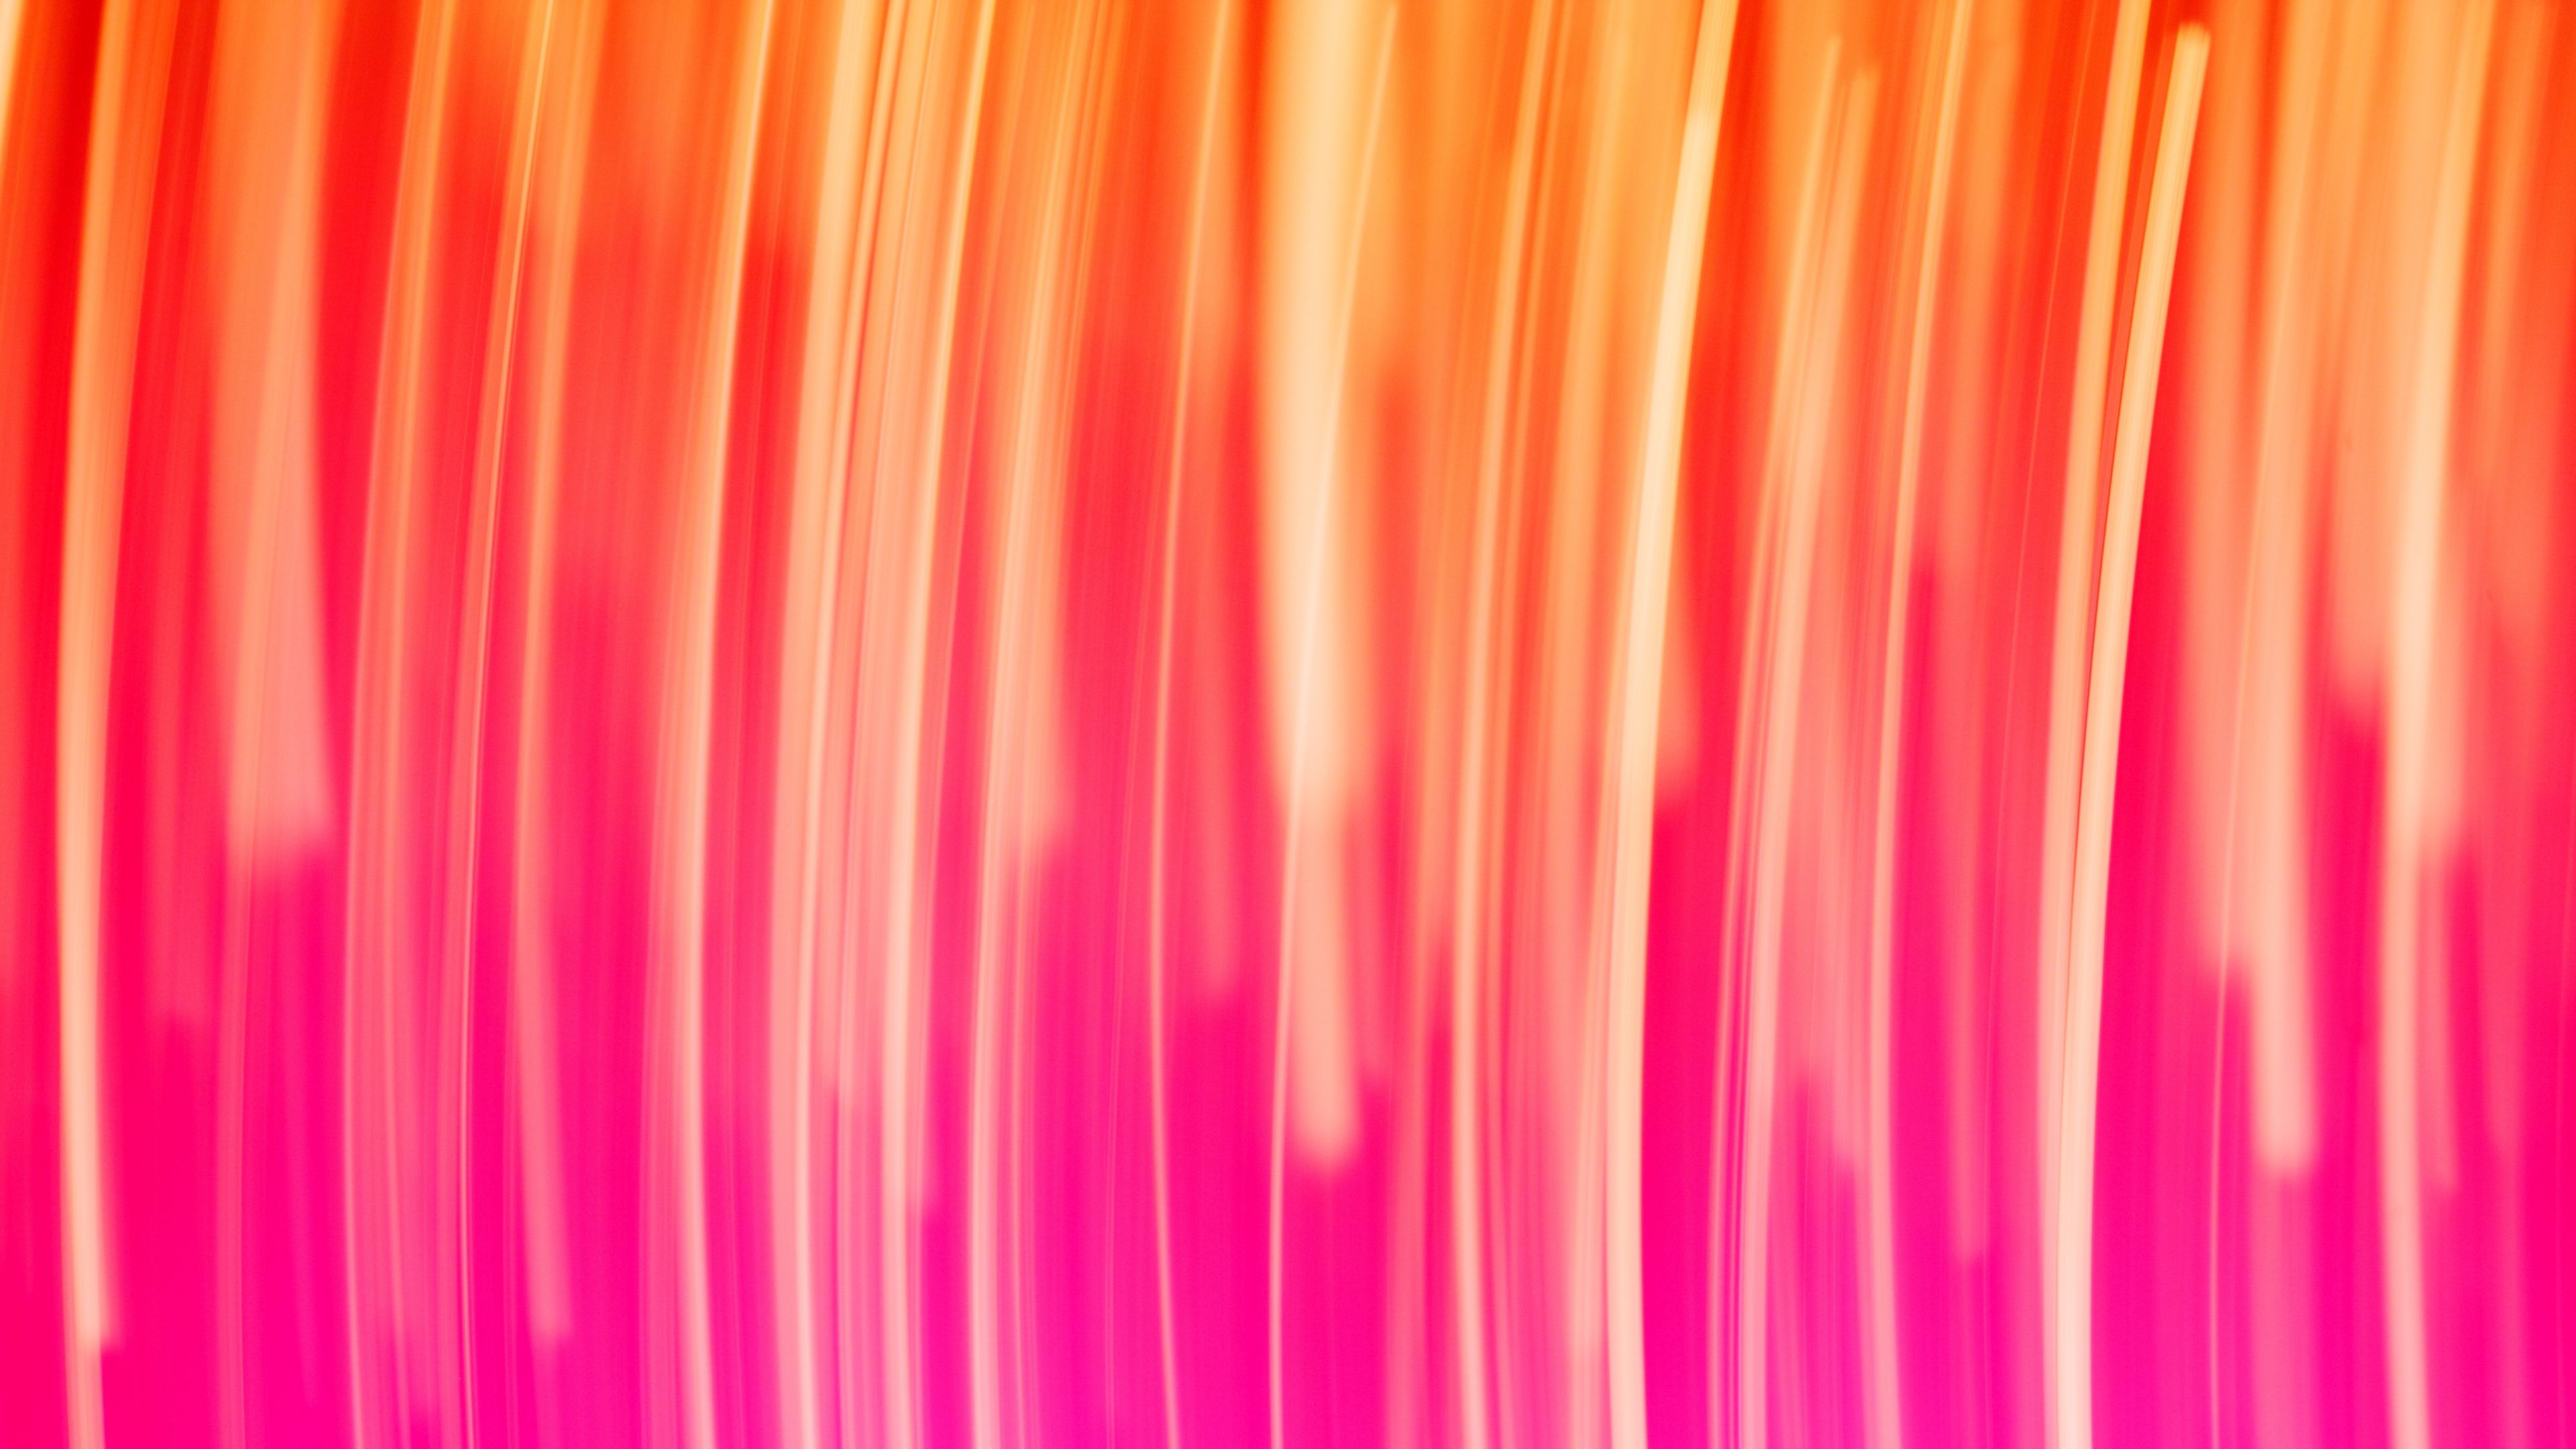 Download wallpaper 3840x2160 lines, pink, glow, vertical 4k uhd 16:9 HD background